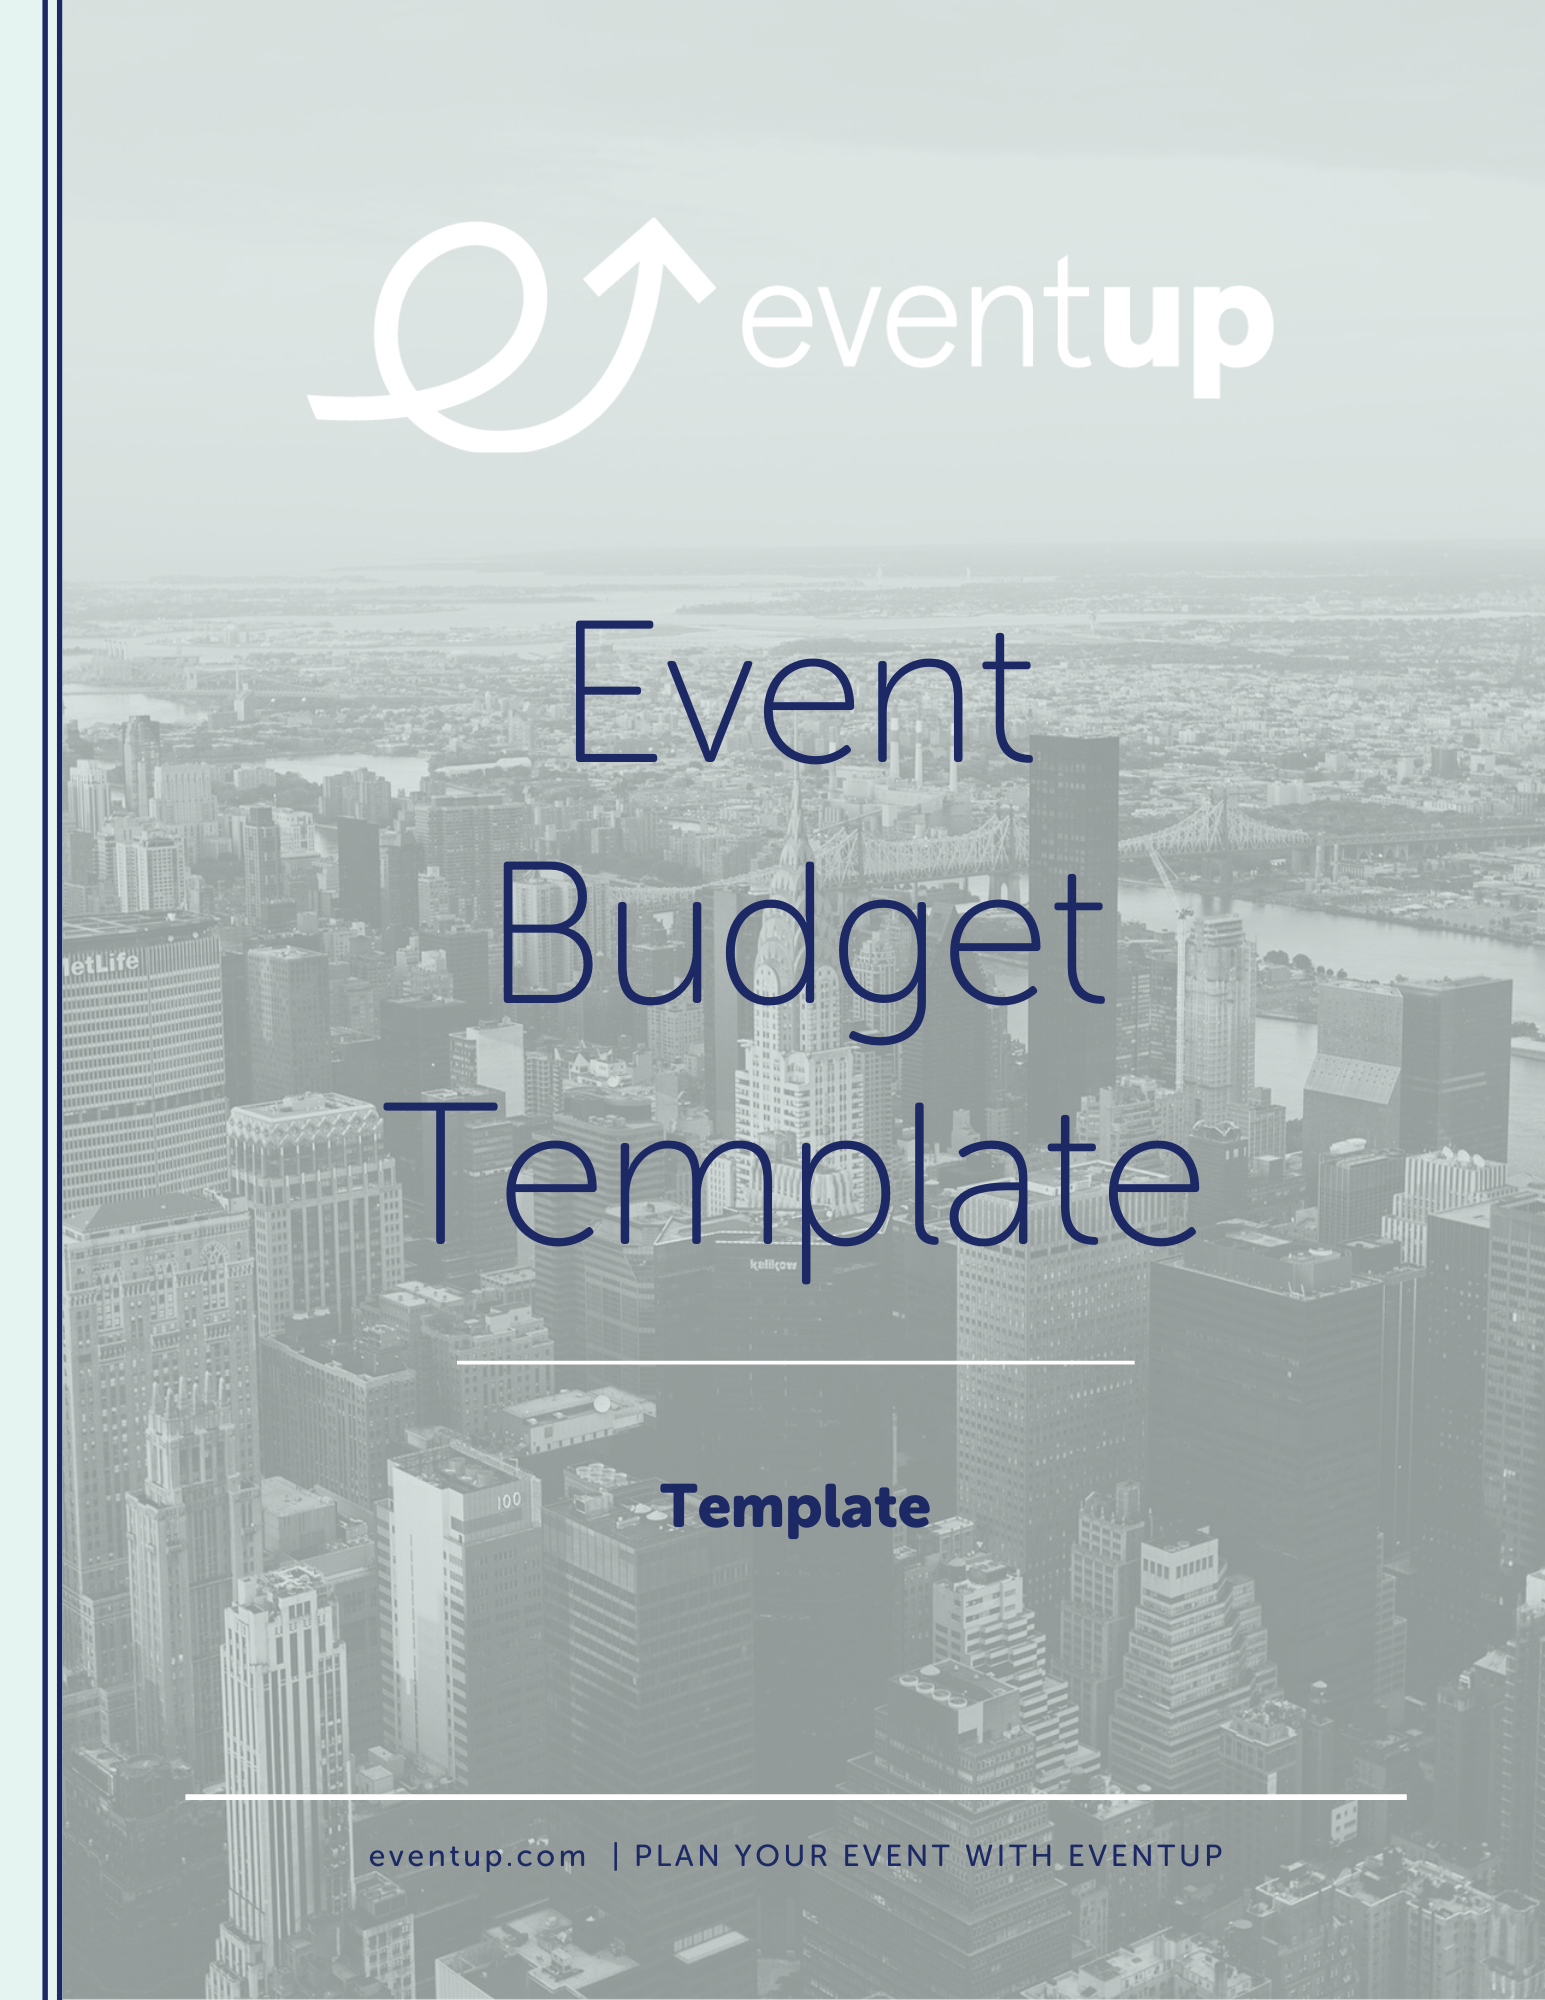 EventUp - Event Budget Template